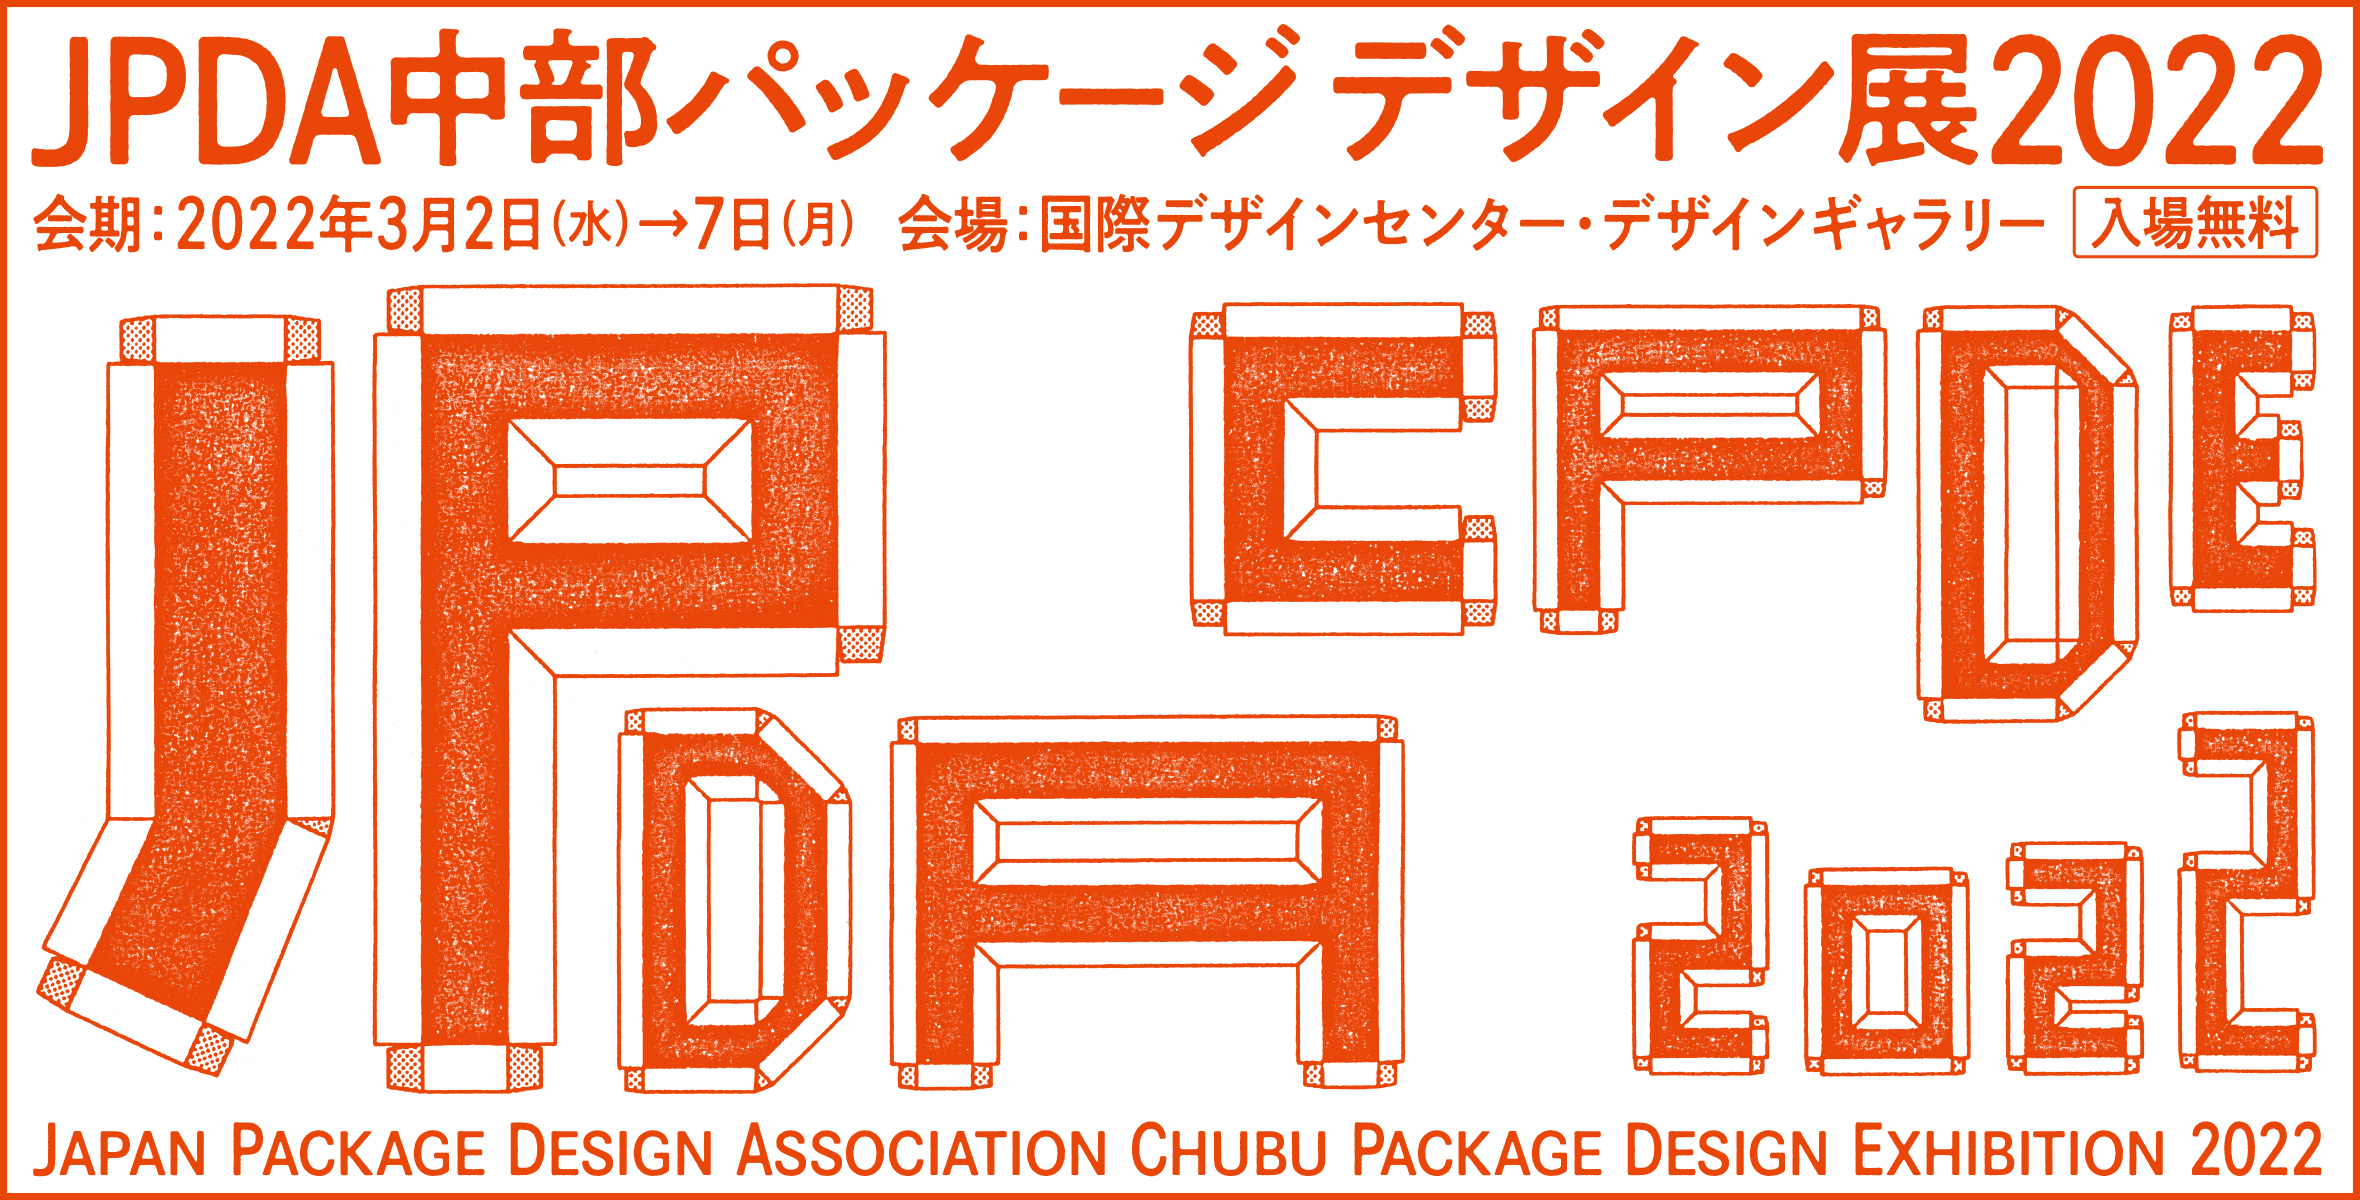 JPDA中部パッケージデザイン展2022のイメージ